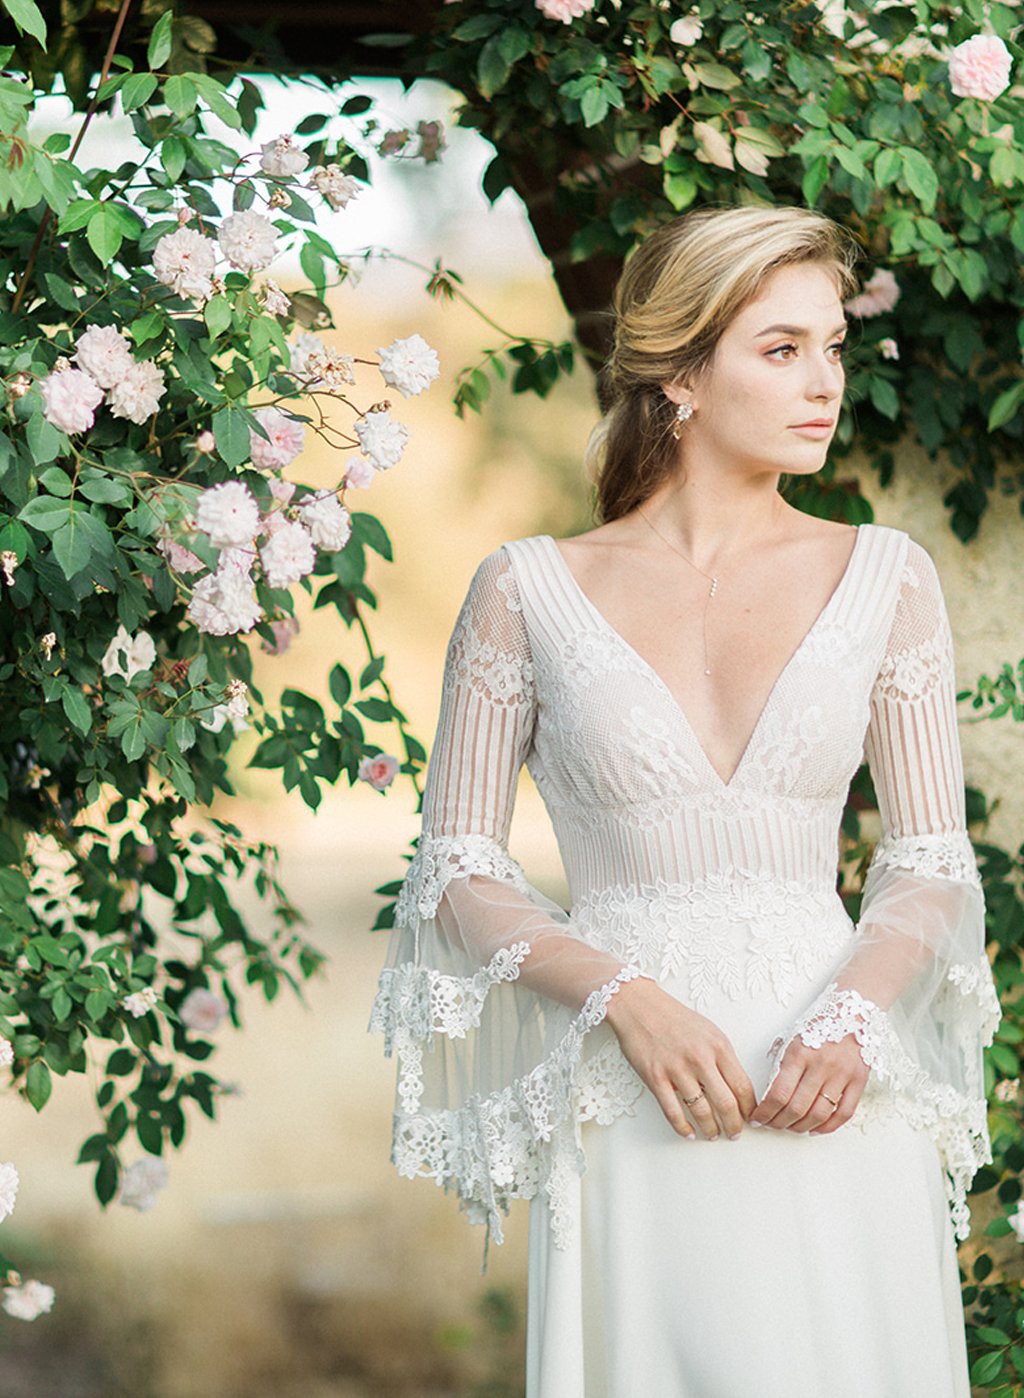 Claire Pettibone Sauvignon New Wedding Dress Save 86% - Stillwhite